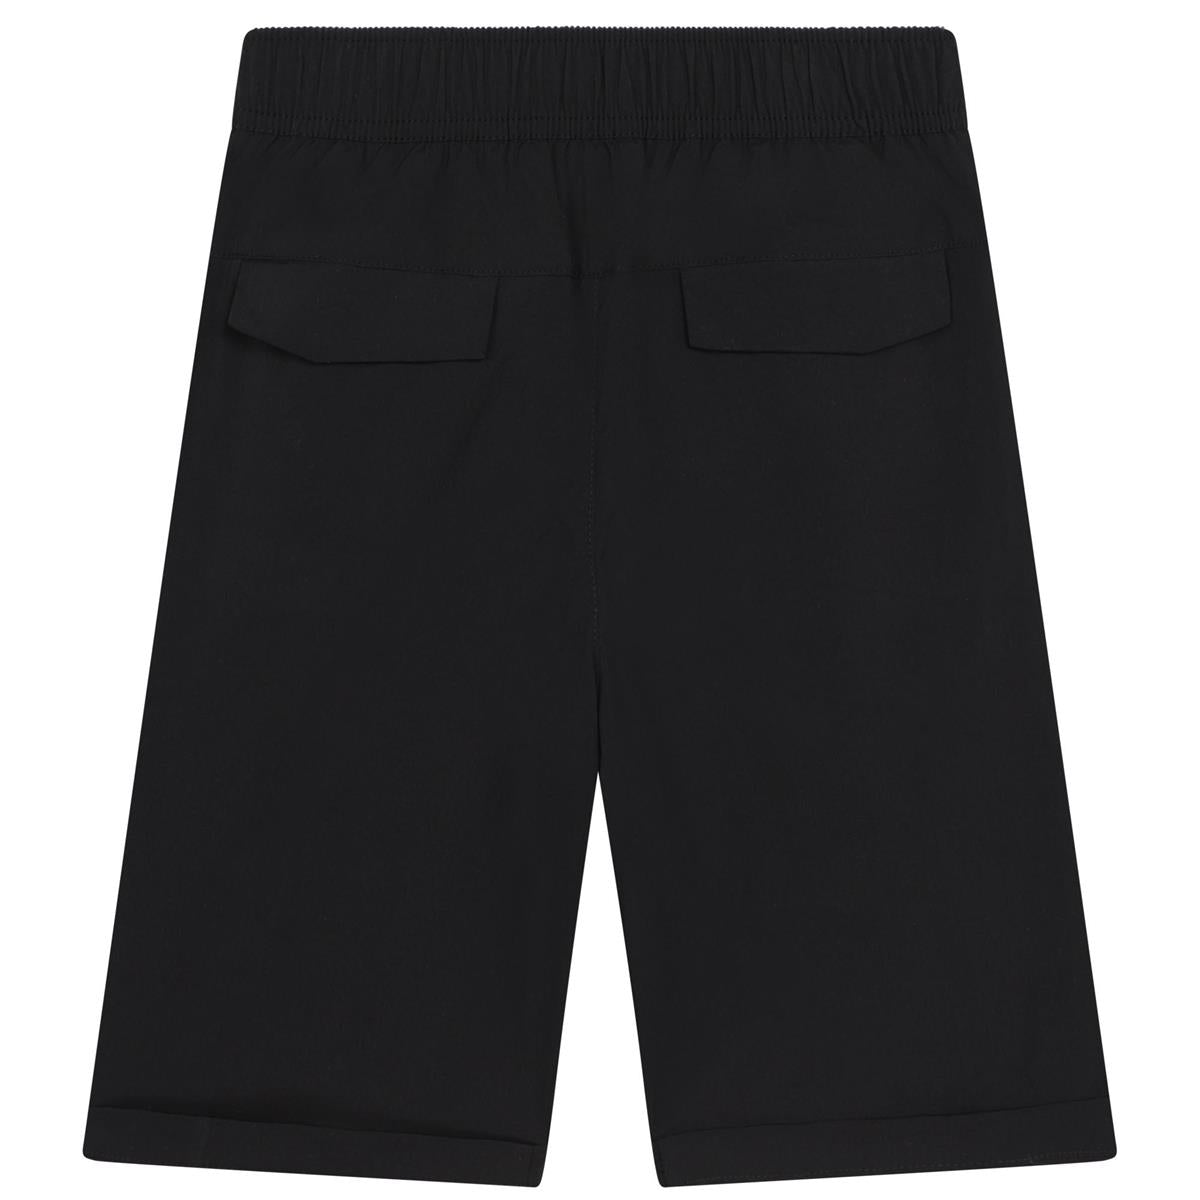 Boys Black Cotton Shorts